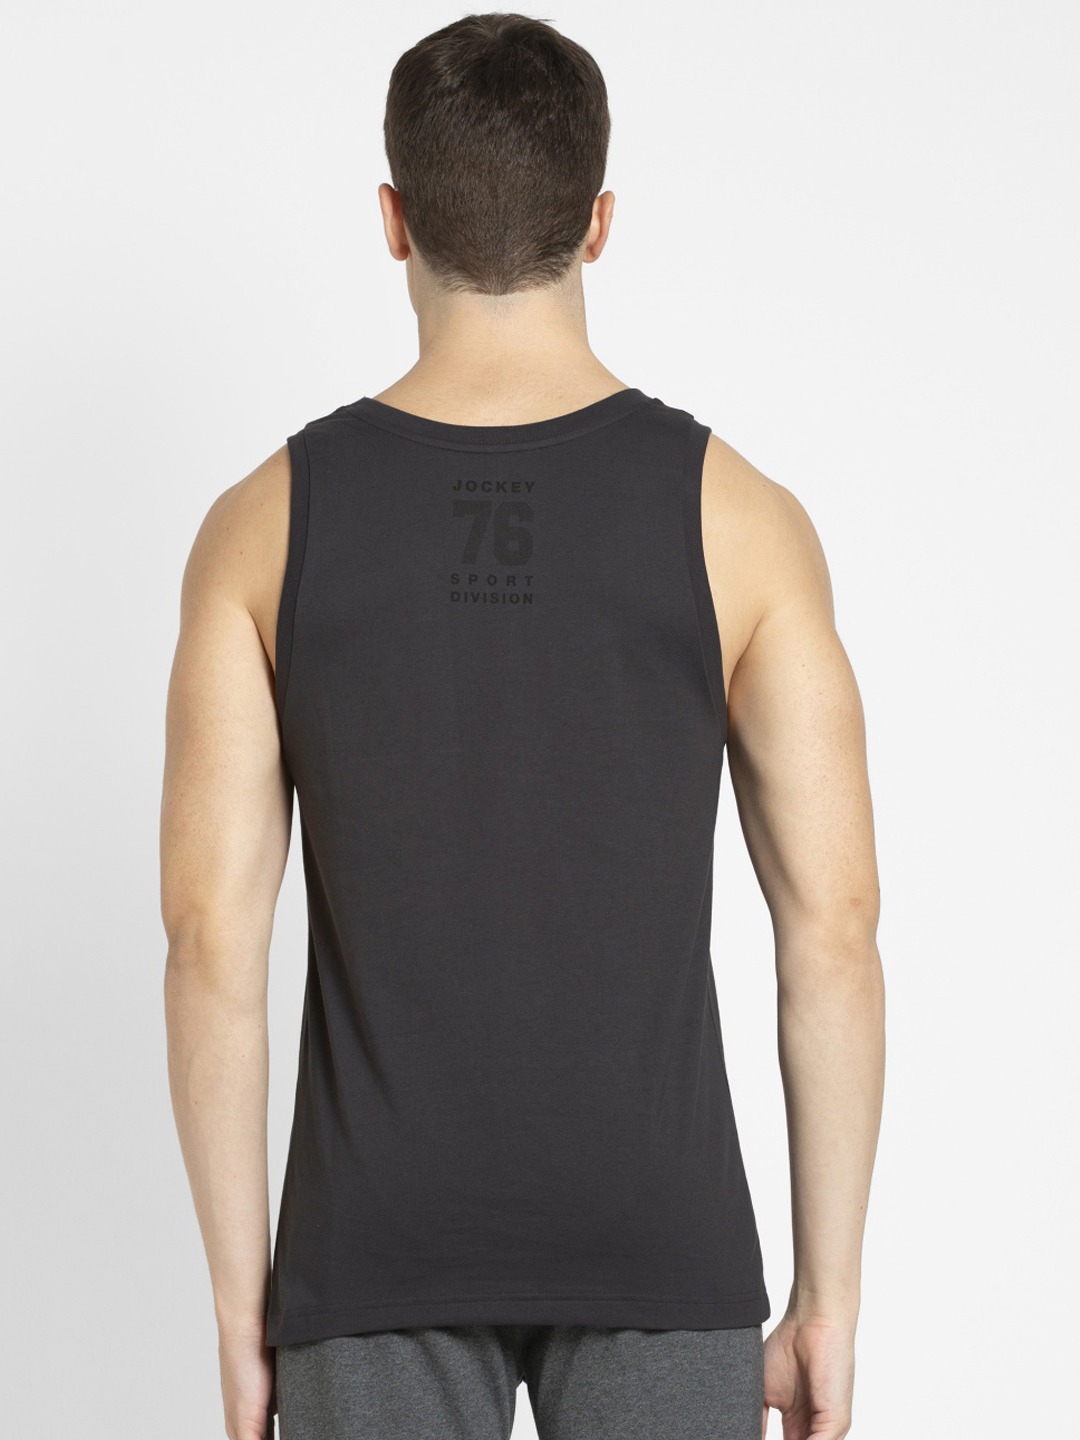 Clothing Innerwear Vests | Jockey Men Charcoal Grey Printed Basic Top 9928-0105-GRASP - RS66218